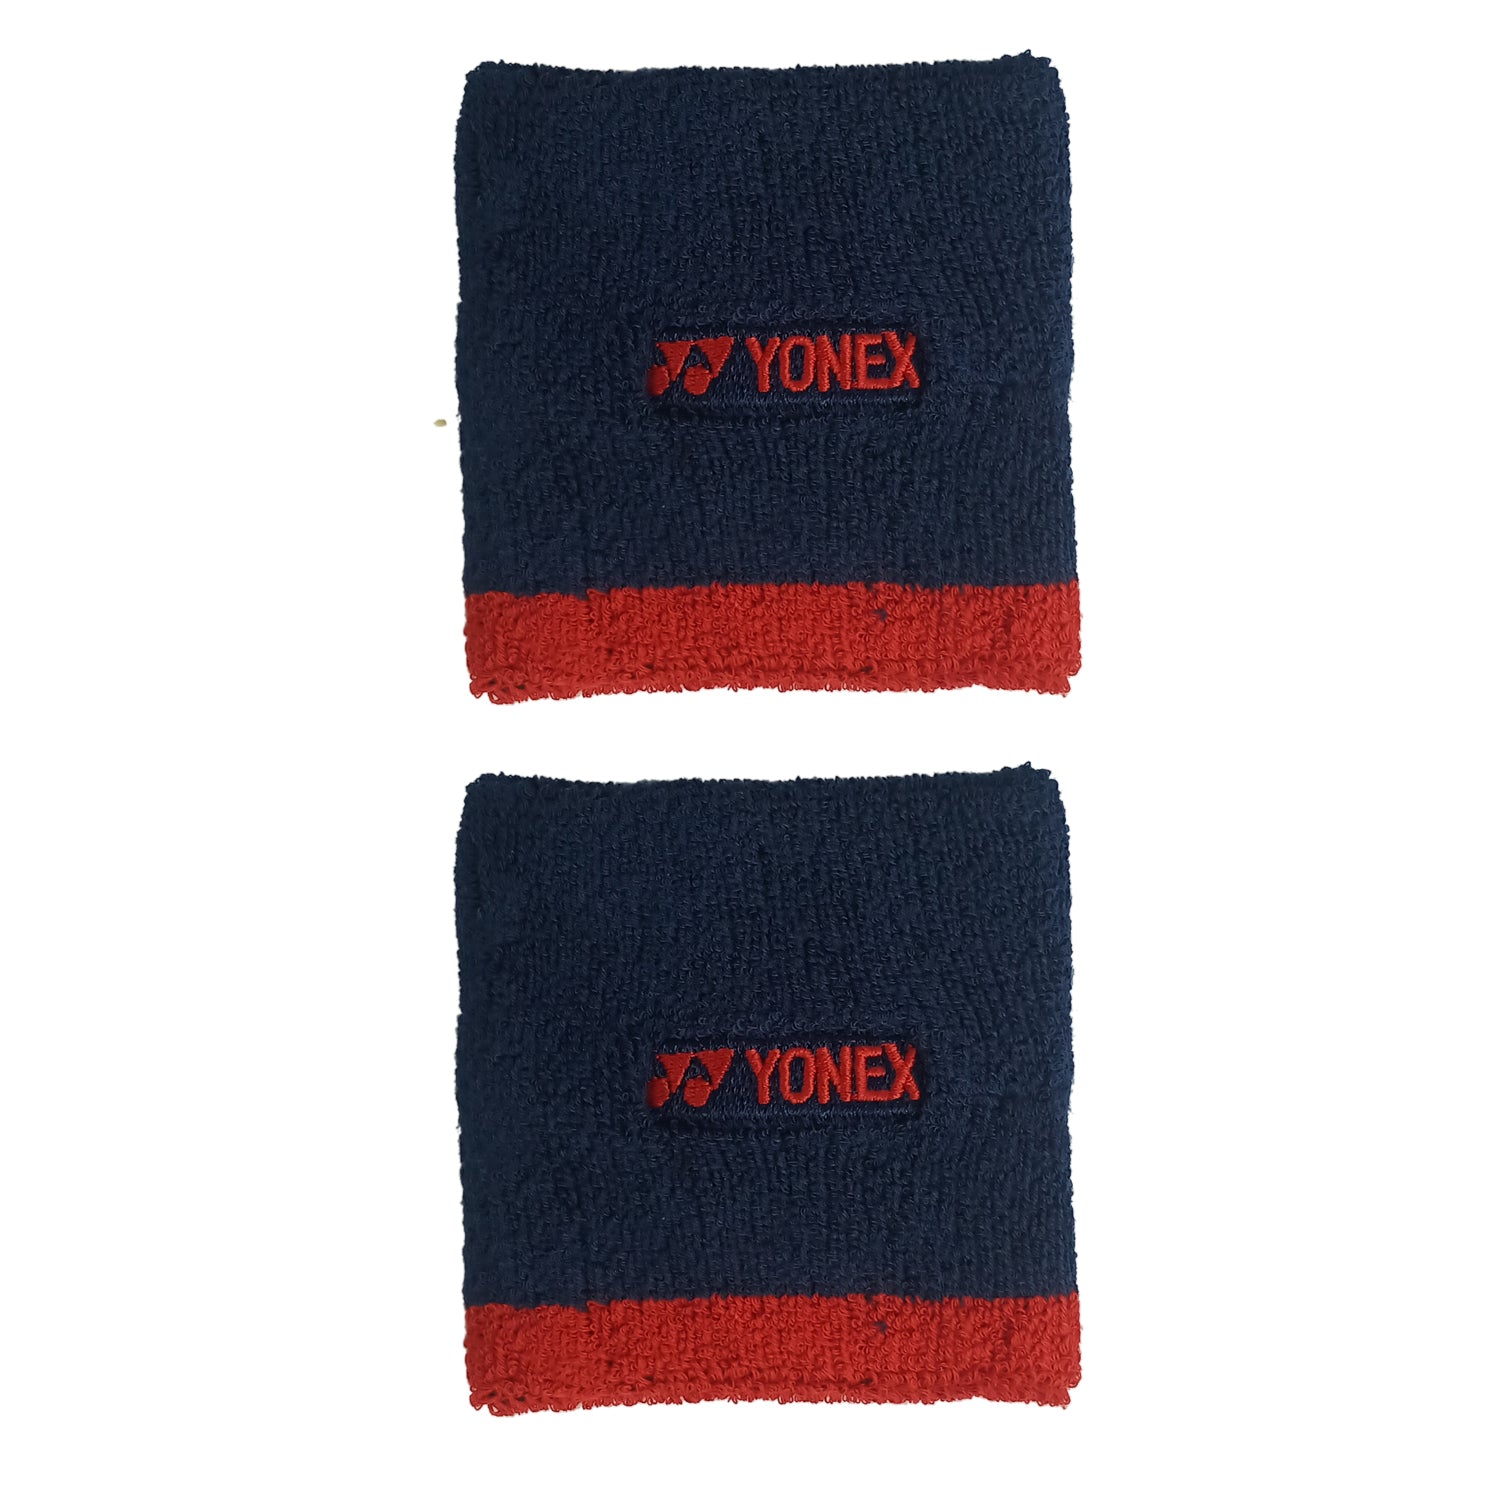 Yonex 08501 Wrist Band, Navy/Red (Pack of 2) - Best Price online Prokicksports.com